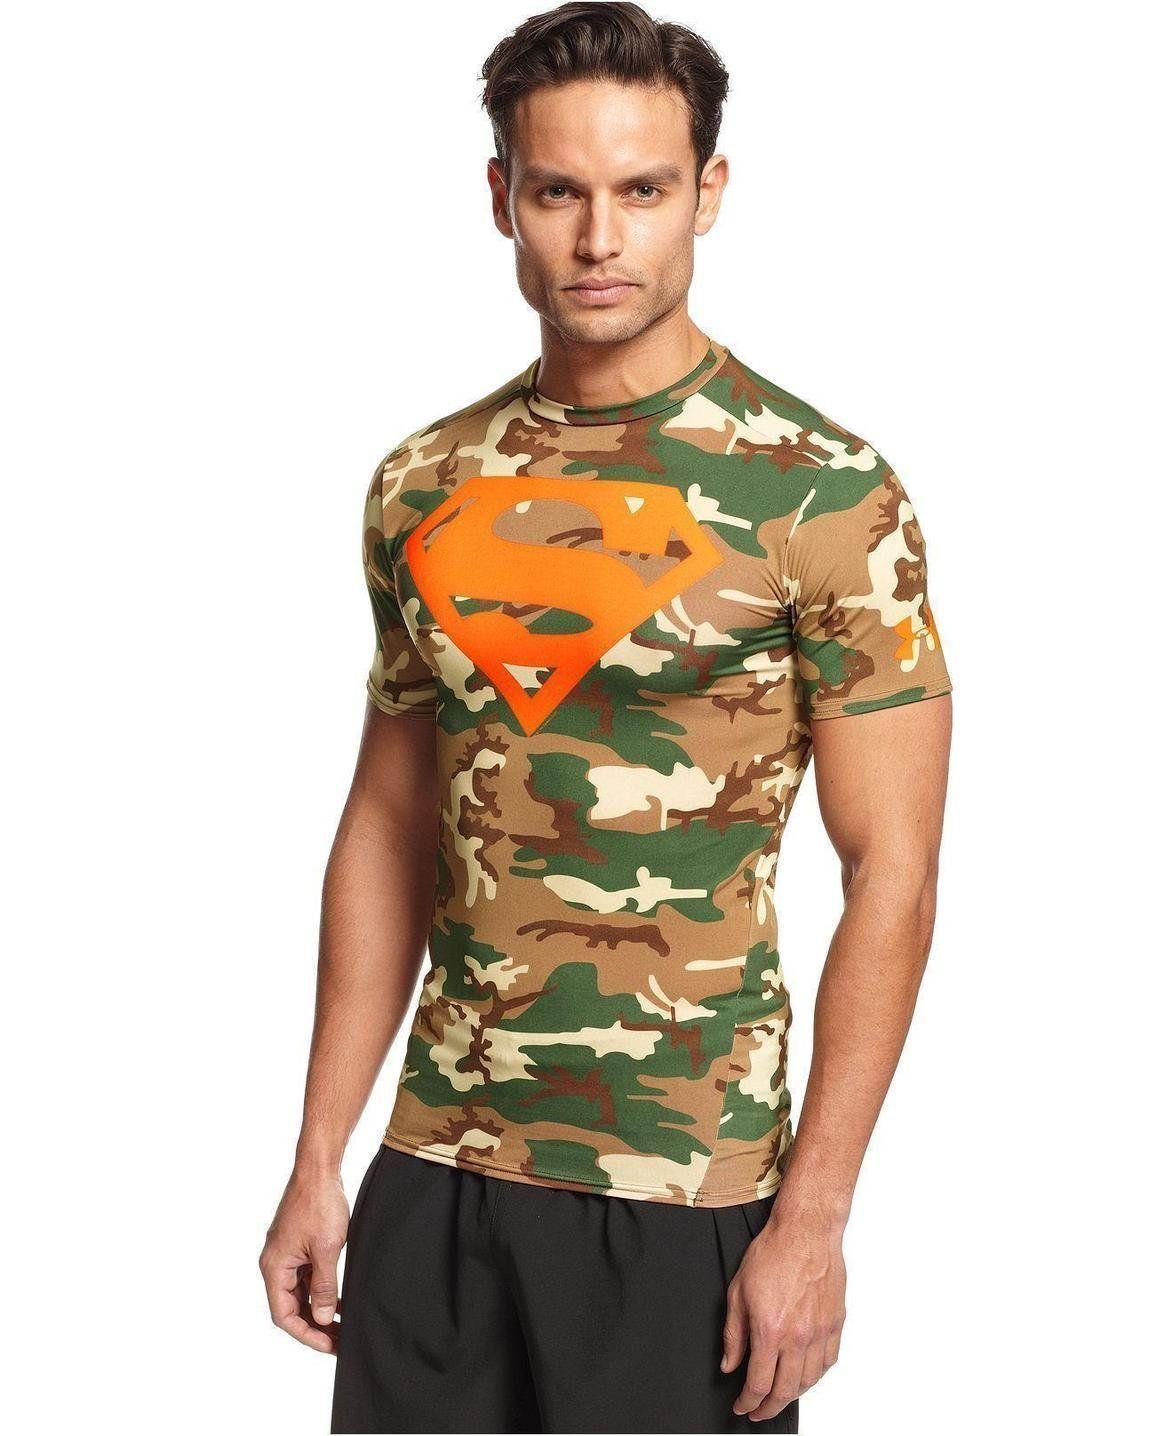 Orange Camo Superman Logo - Under Armour Alter Ego camo & orange #Superman compression t-shirt ...